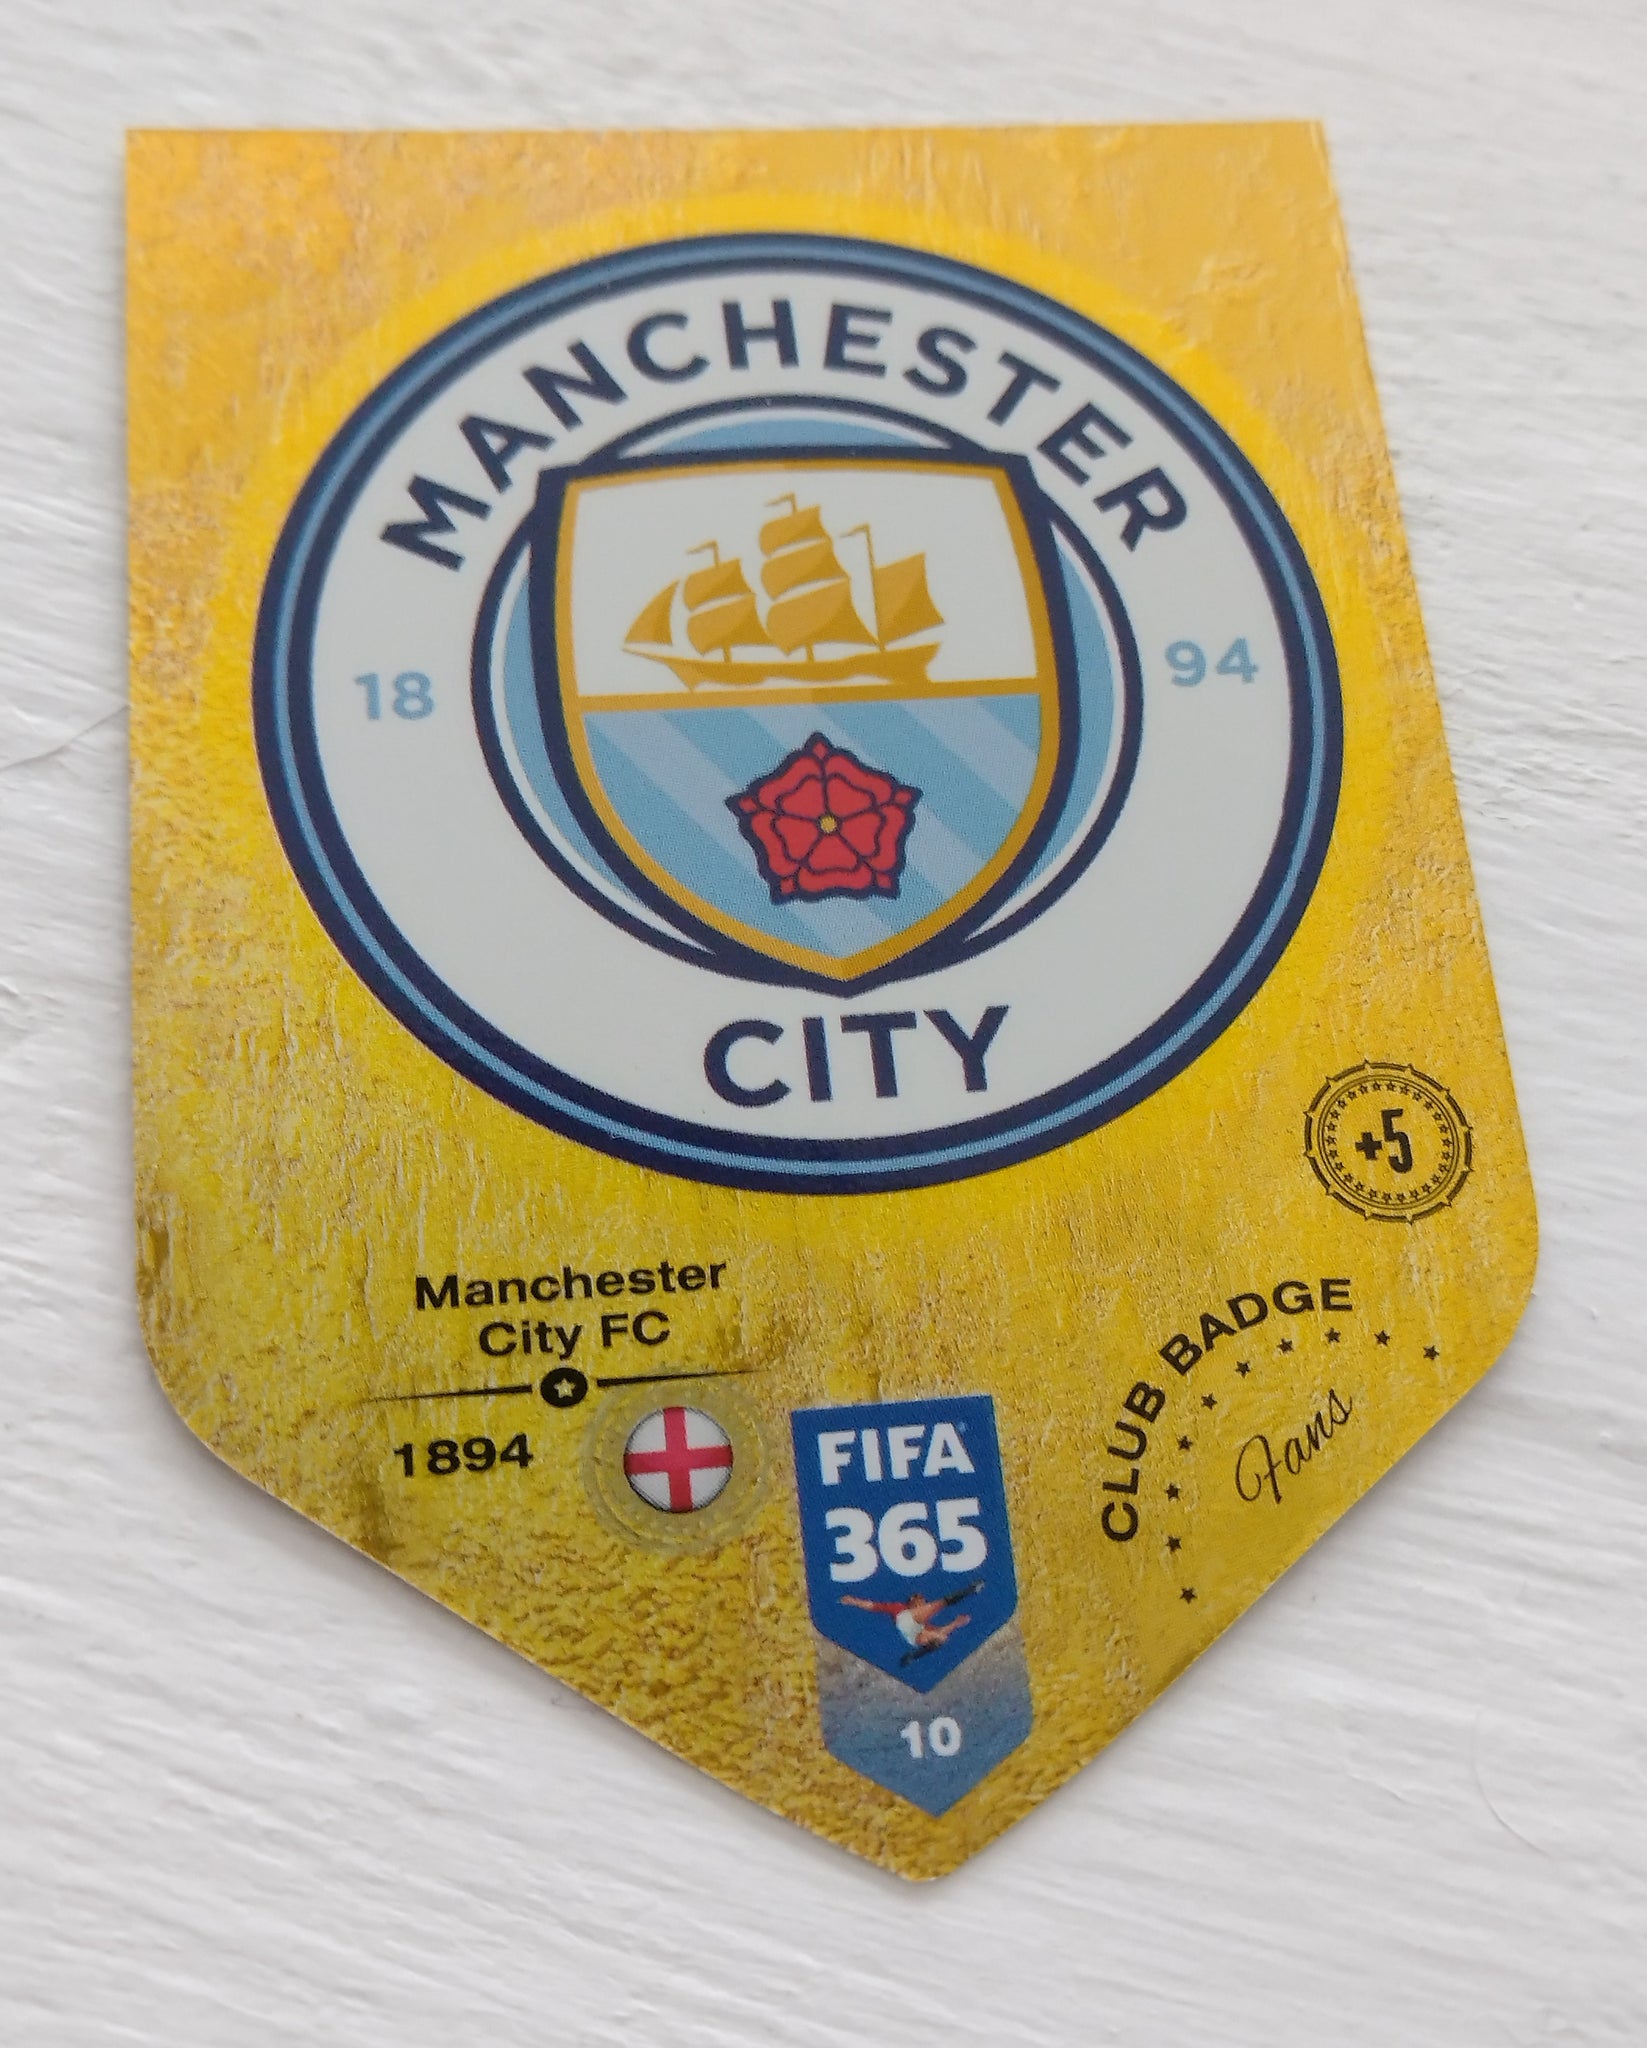 2019 Panini Adrenalyn FIFA 365 Manchester City #10 Club Badge Trading Card